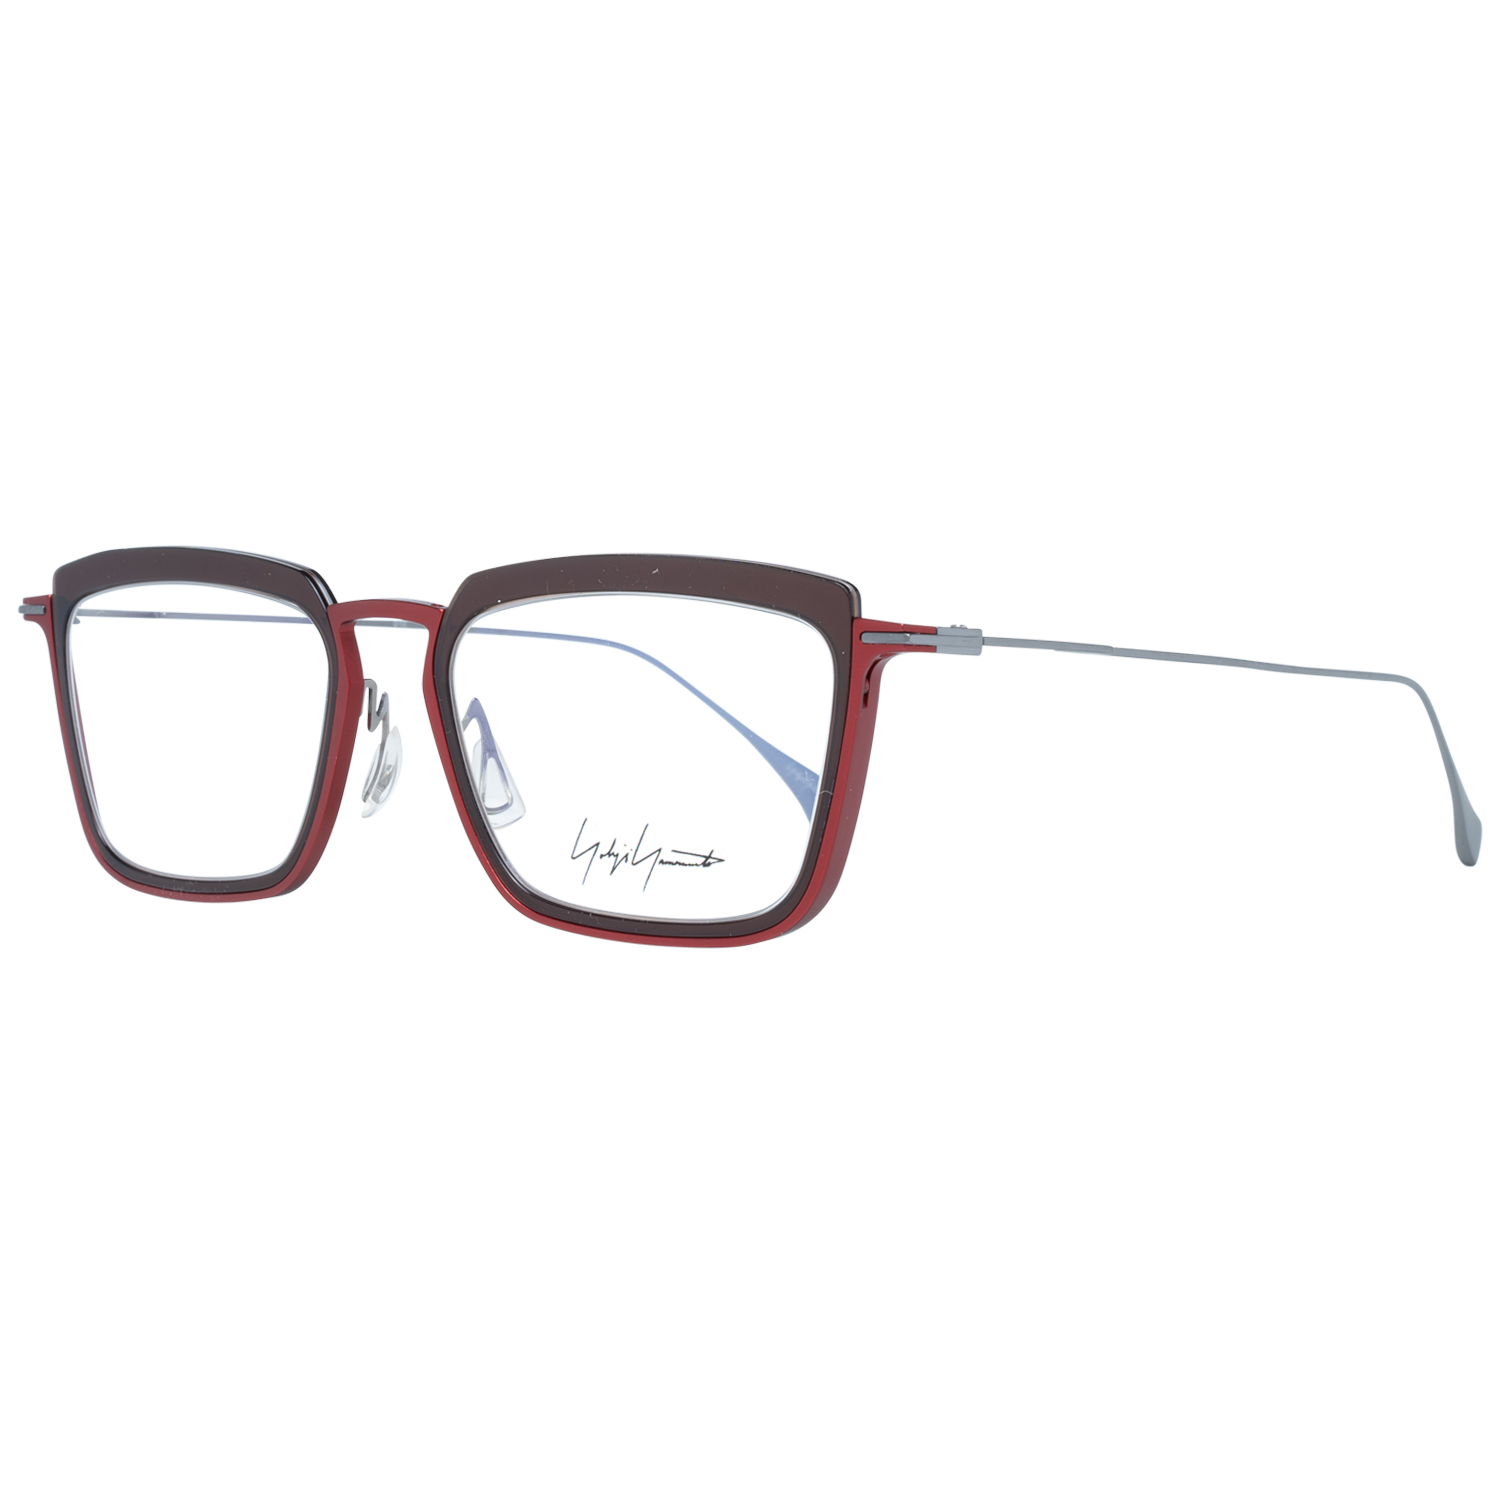 Yohji Yamamoto Frames Yohji Yamamoto Optical Frame YY1040 209 53 Eyeglasses Eyewear UK USA Australia 